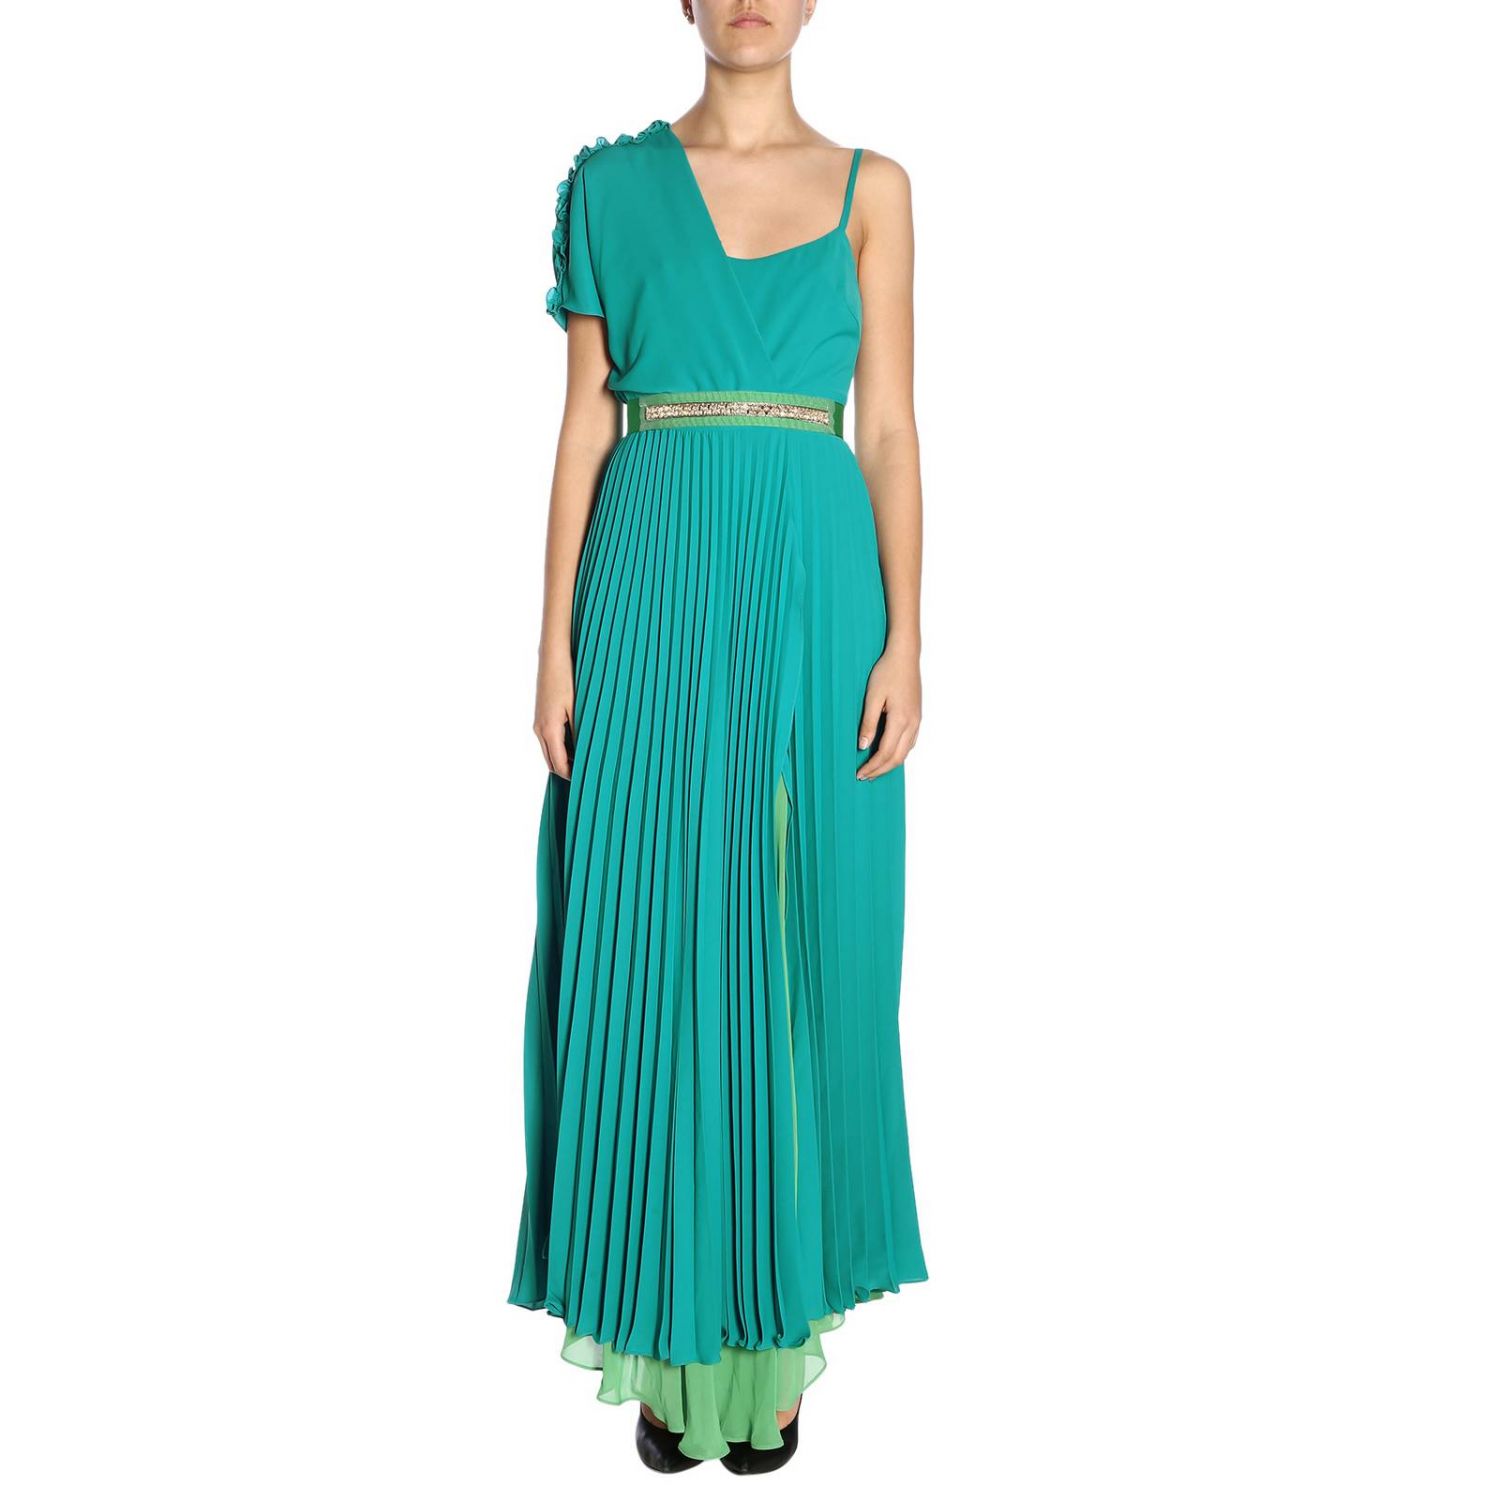 Hanita Outlet: Dress women - Turquoise | Dress Hanita HV2258 2410 ...